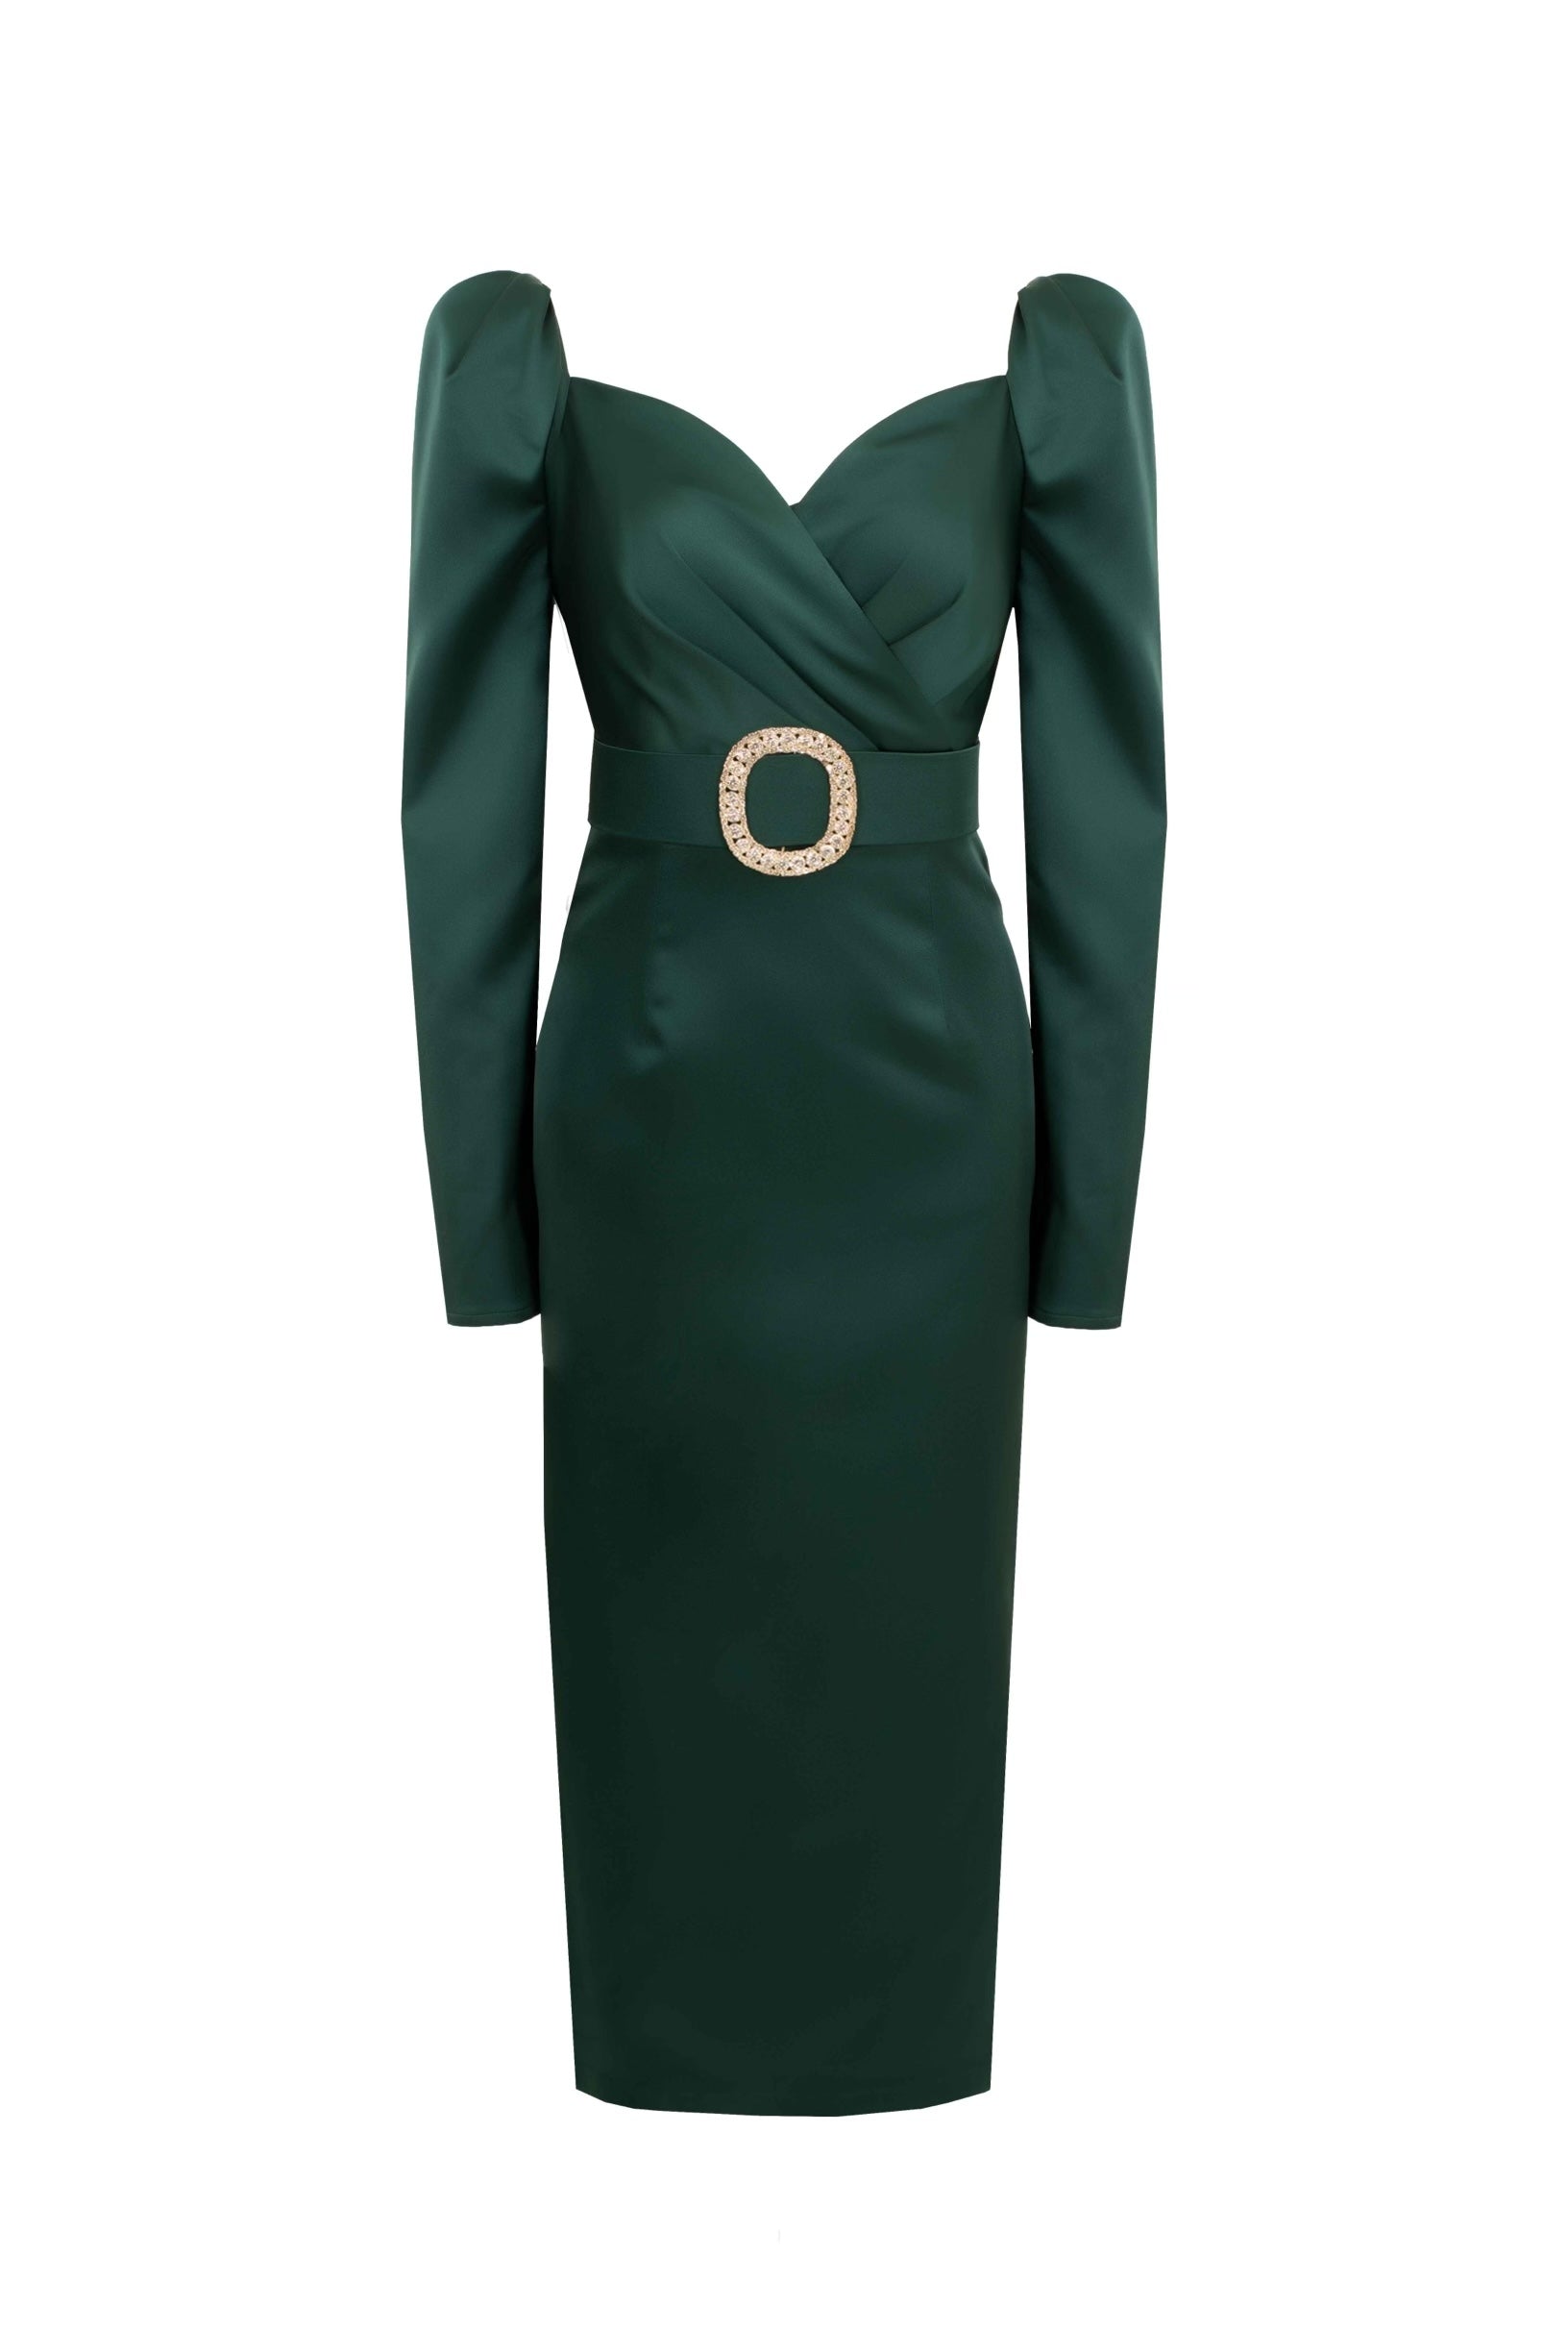 Lüks Kaliteli Elbise Modellerinden Emerald Dress